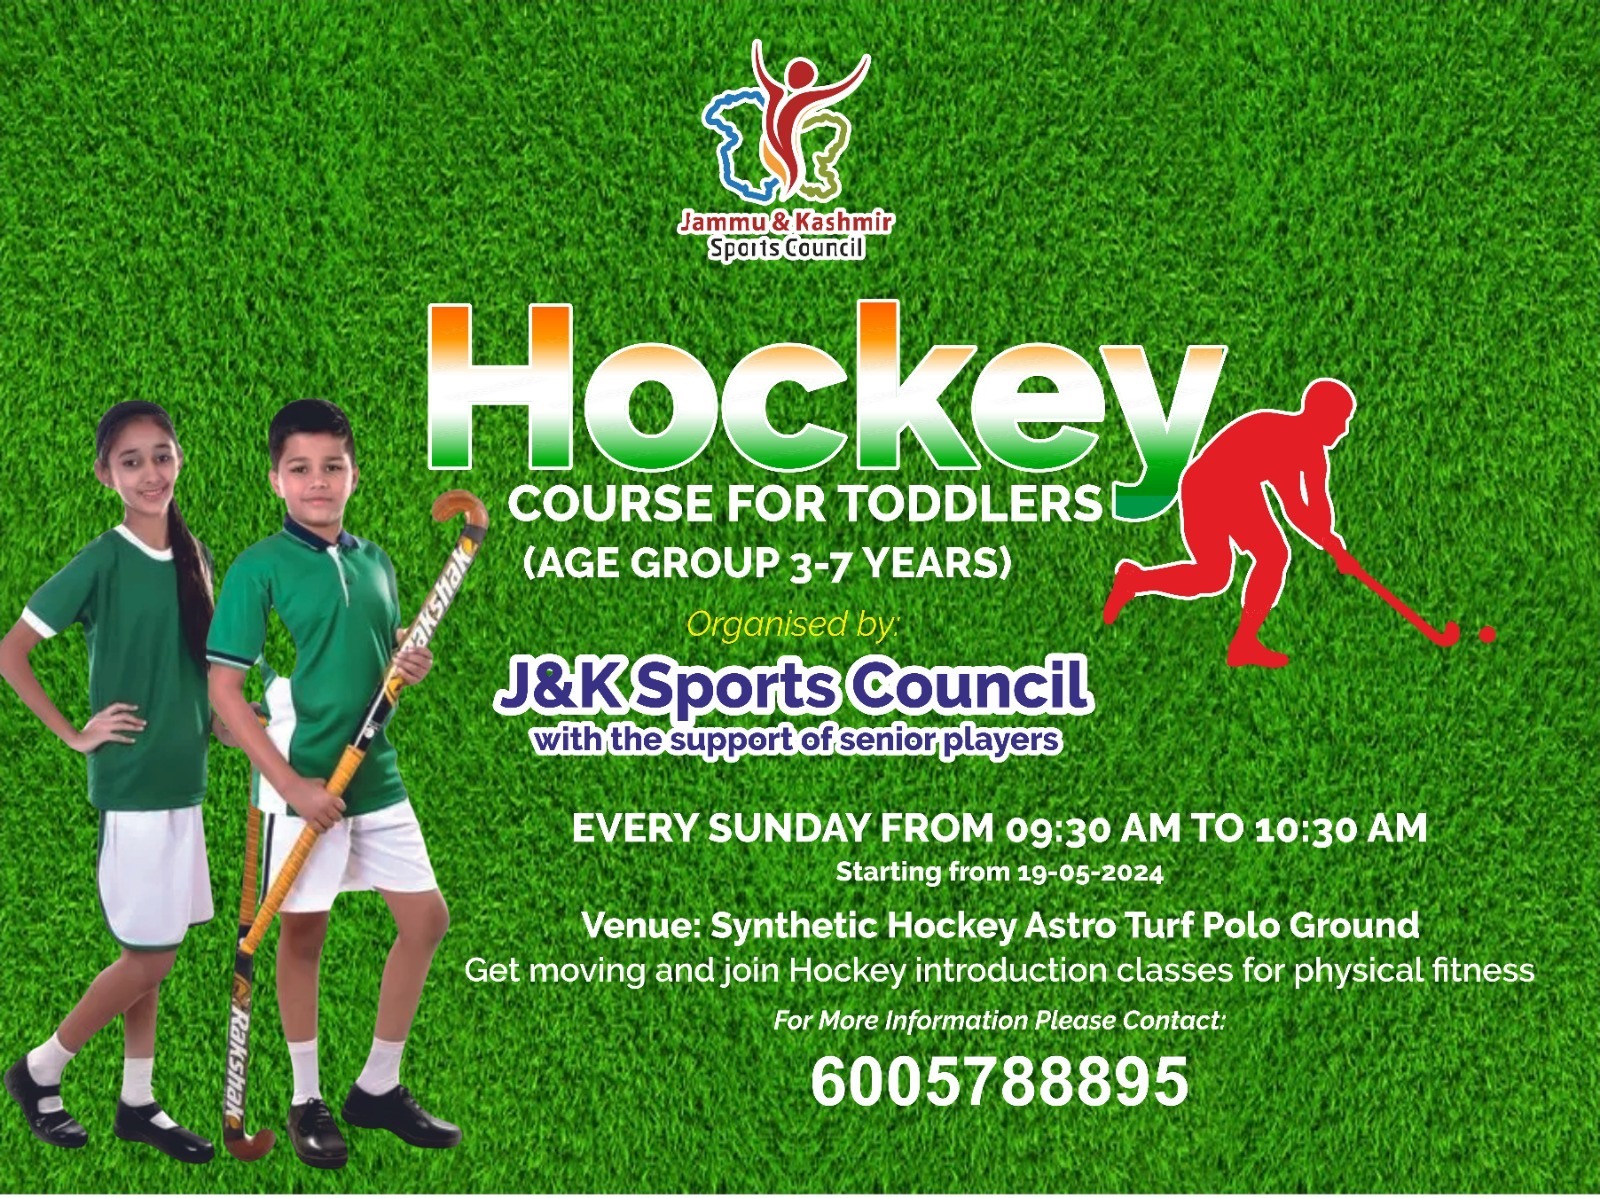 J&K Sports Council, Senior Hockey Players promote Hockey among Toddlers